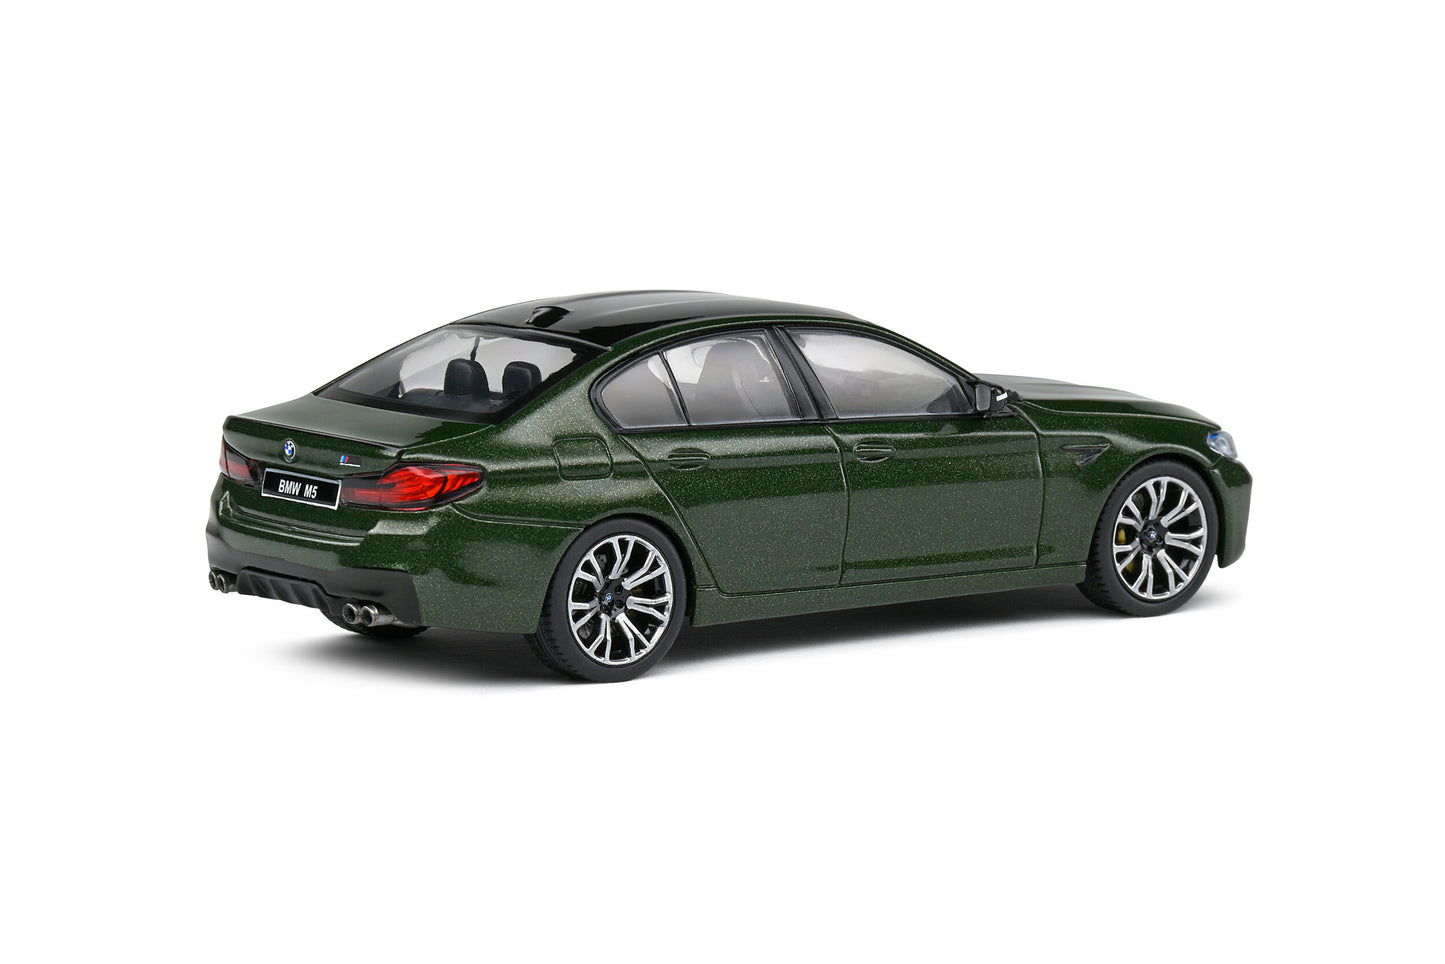 1:43 BMW M5 E90 Competition, 2021, grønmetallic, Solido 4312701, lukket model